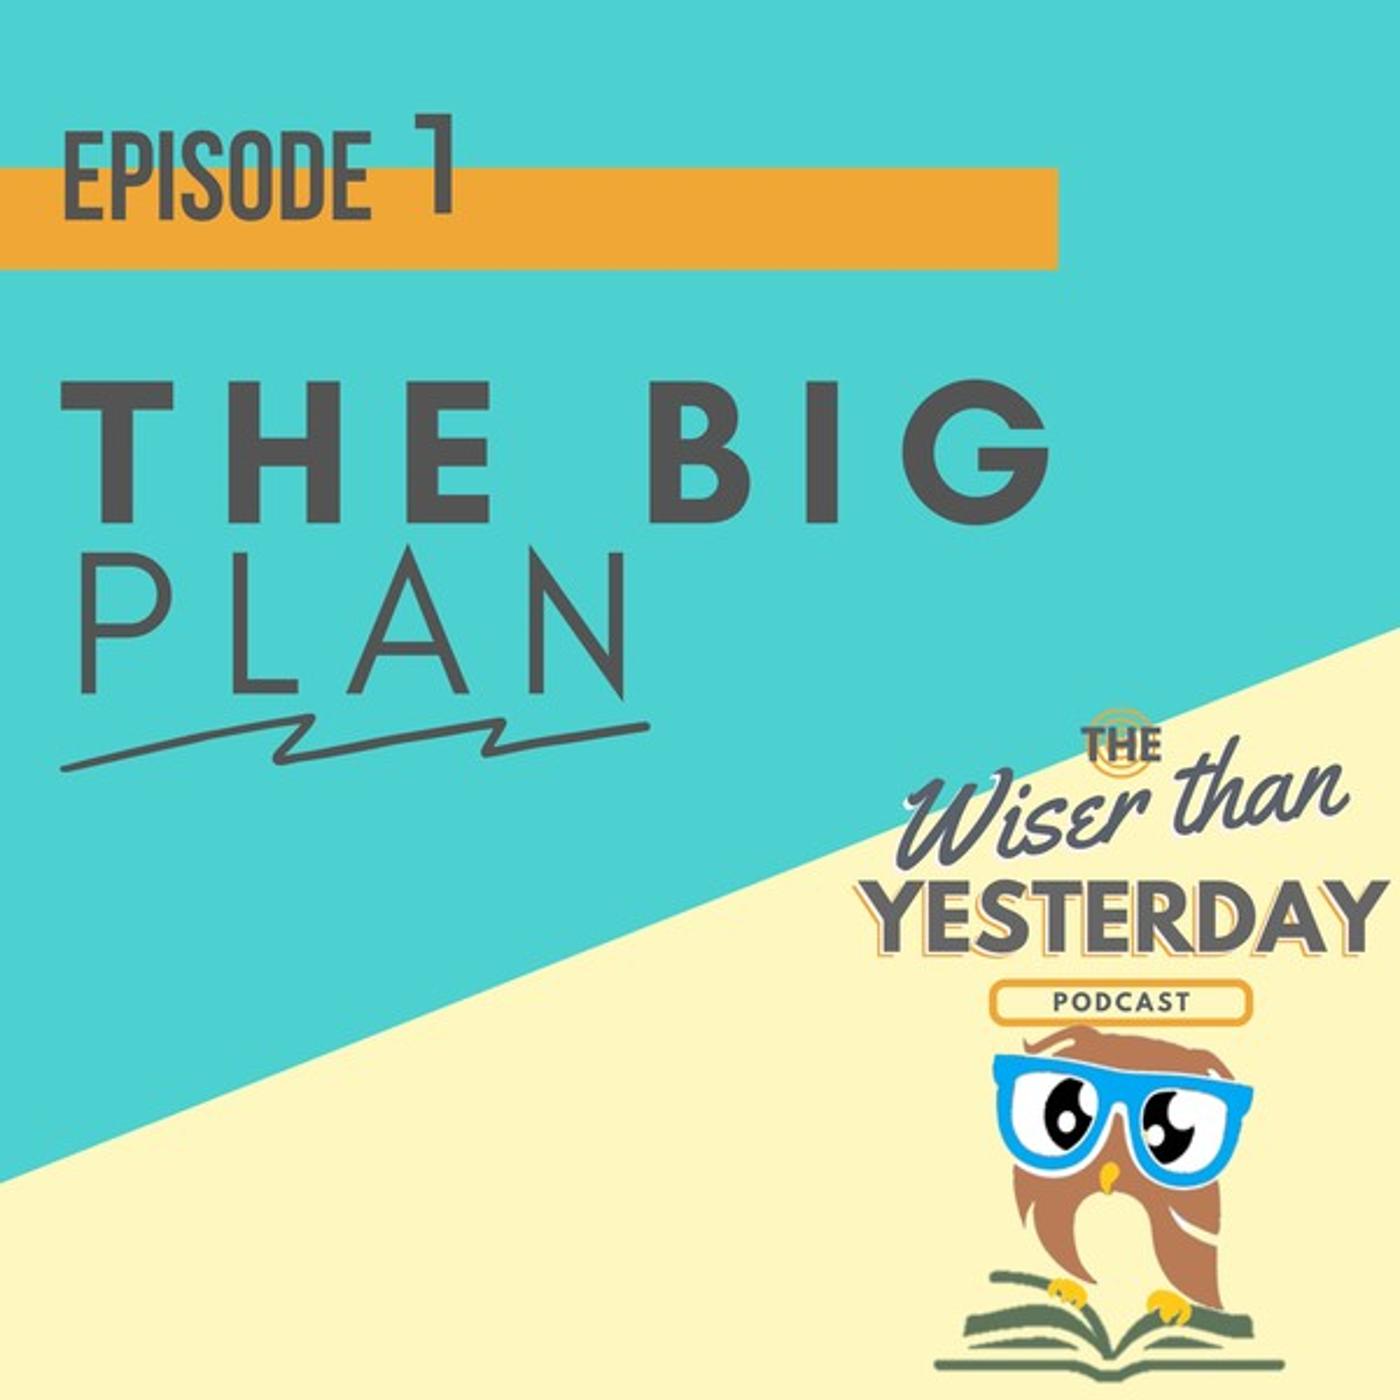 1. Introduction - The Big Plan